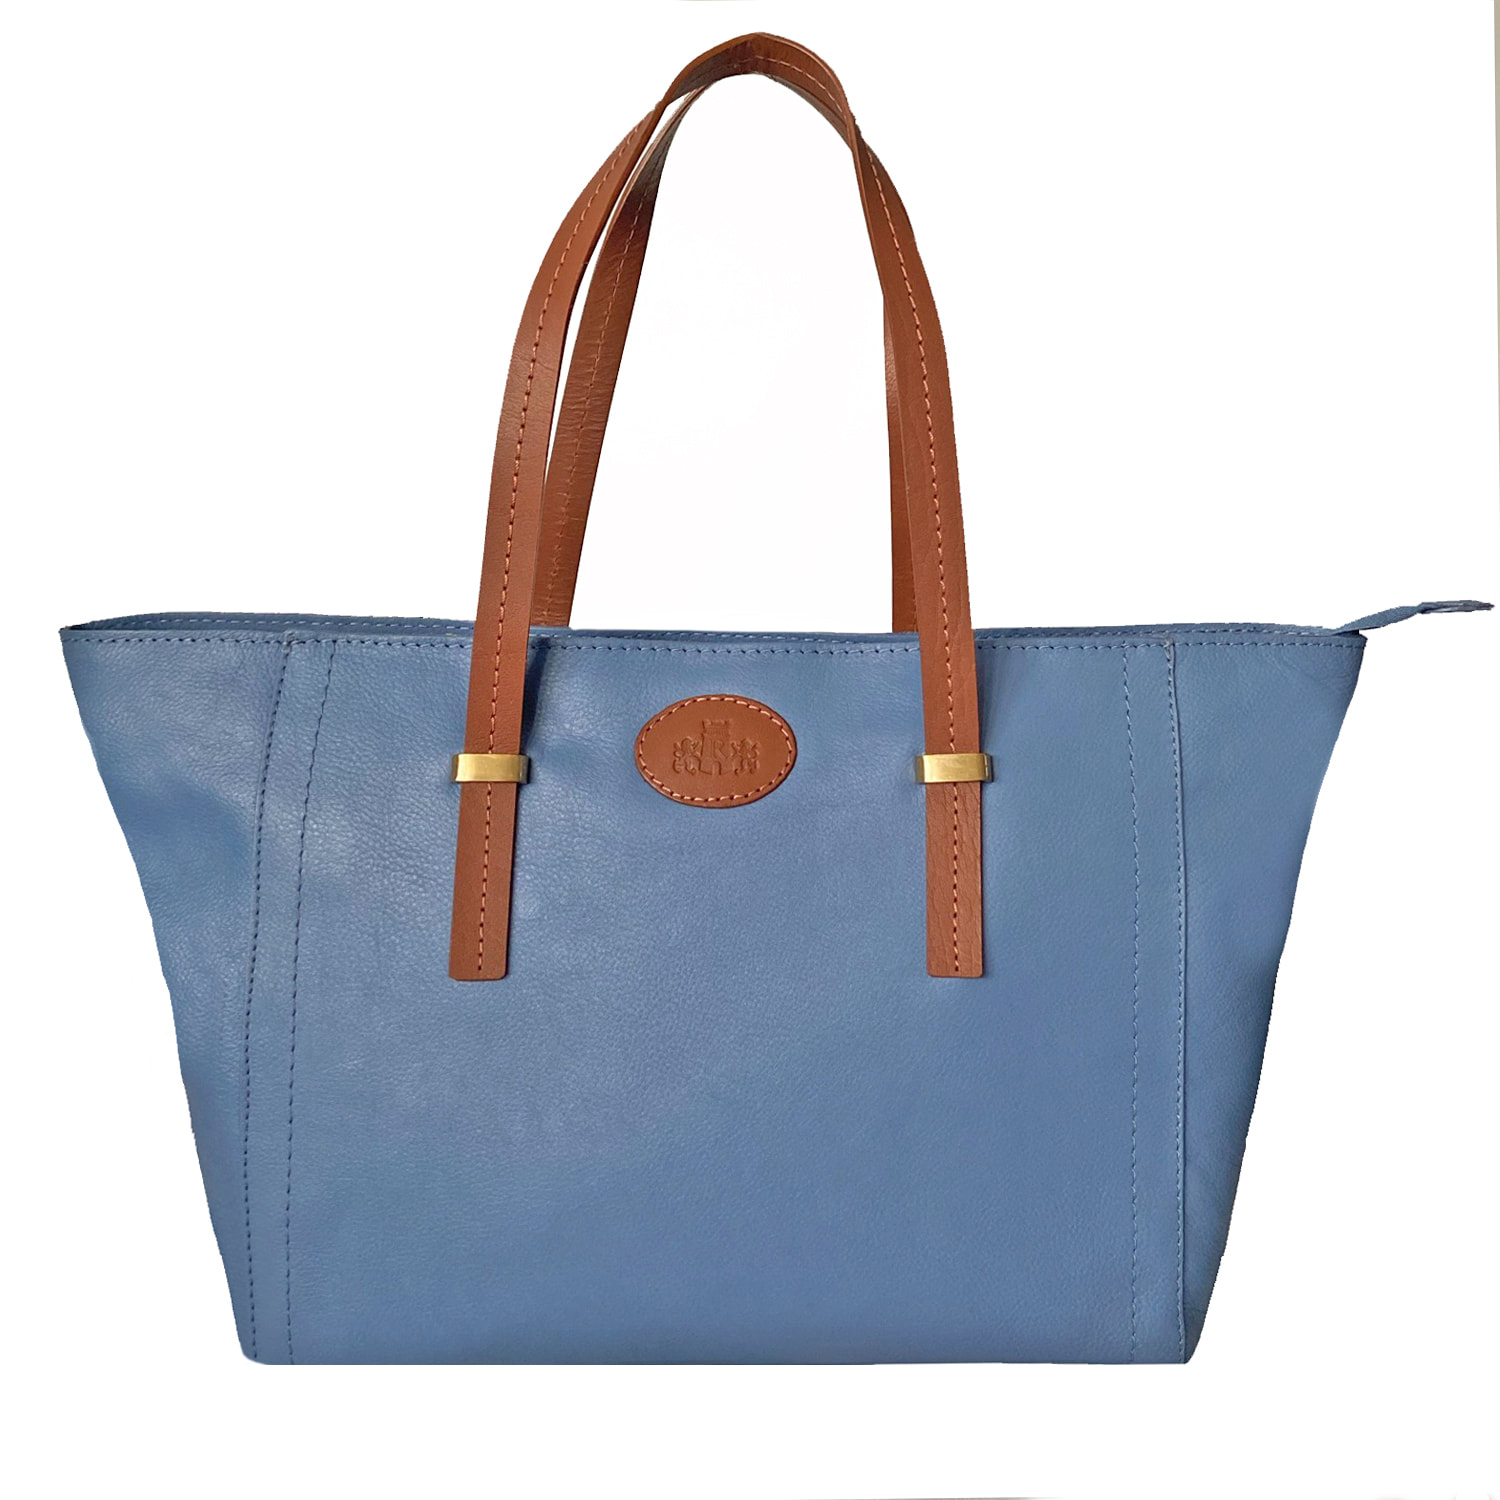 Rowallan Large Blue Leather Handbag, Tote Bag, Shoulder Bag